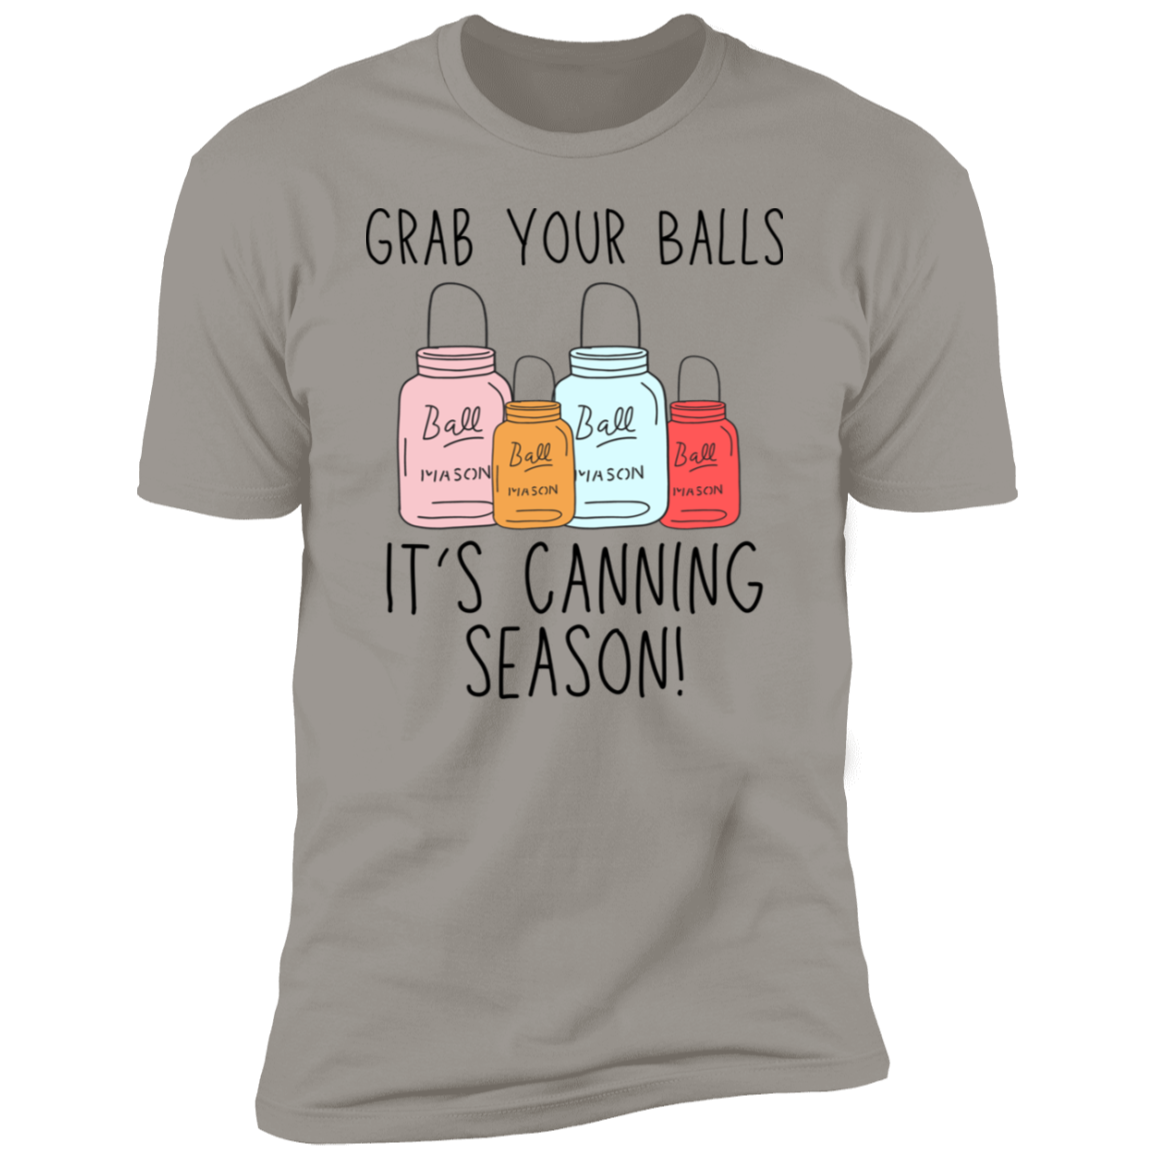 It’s canning season! Grab your Balls T-Shirt